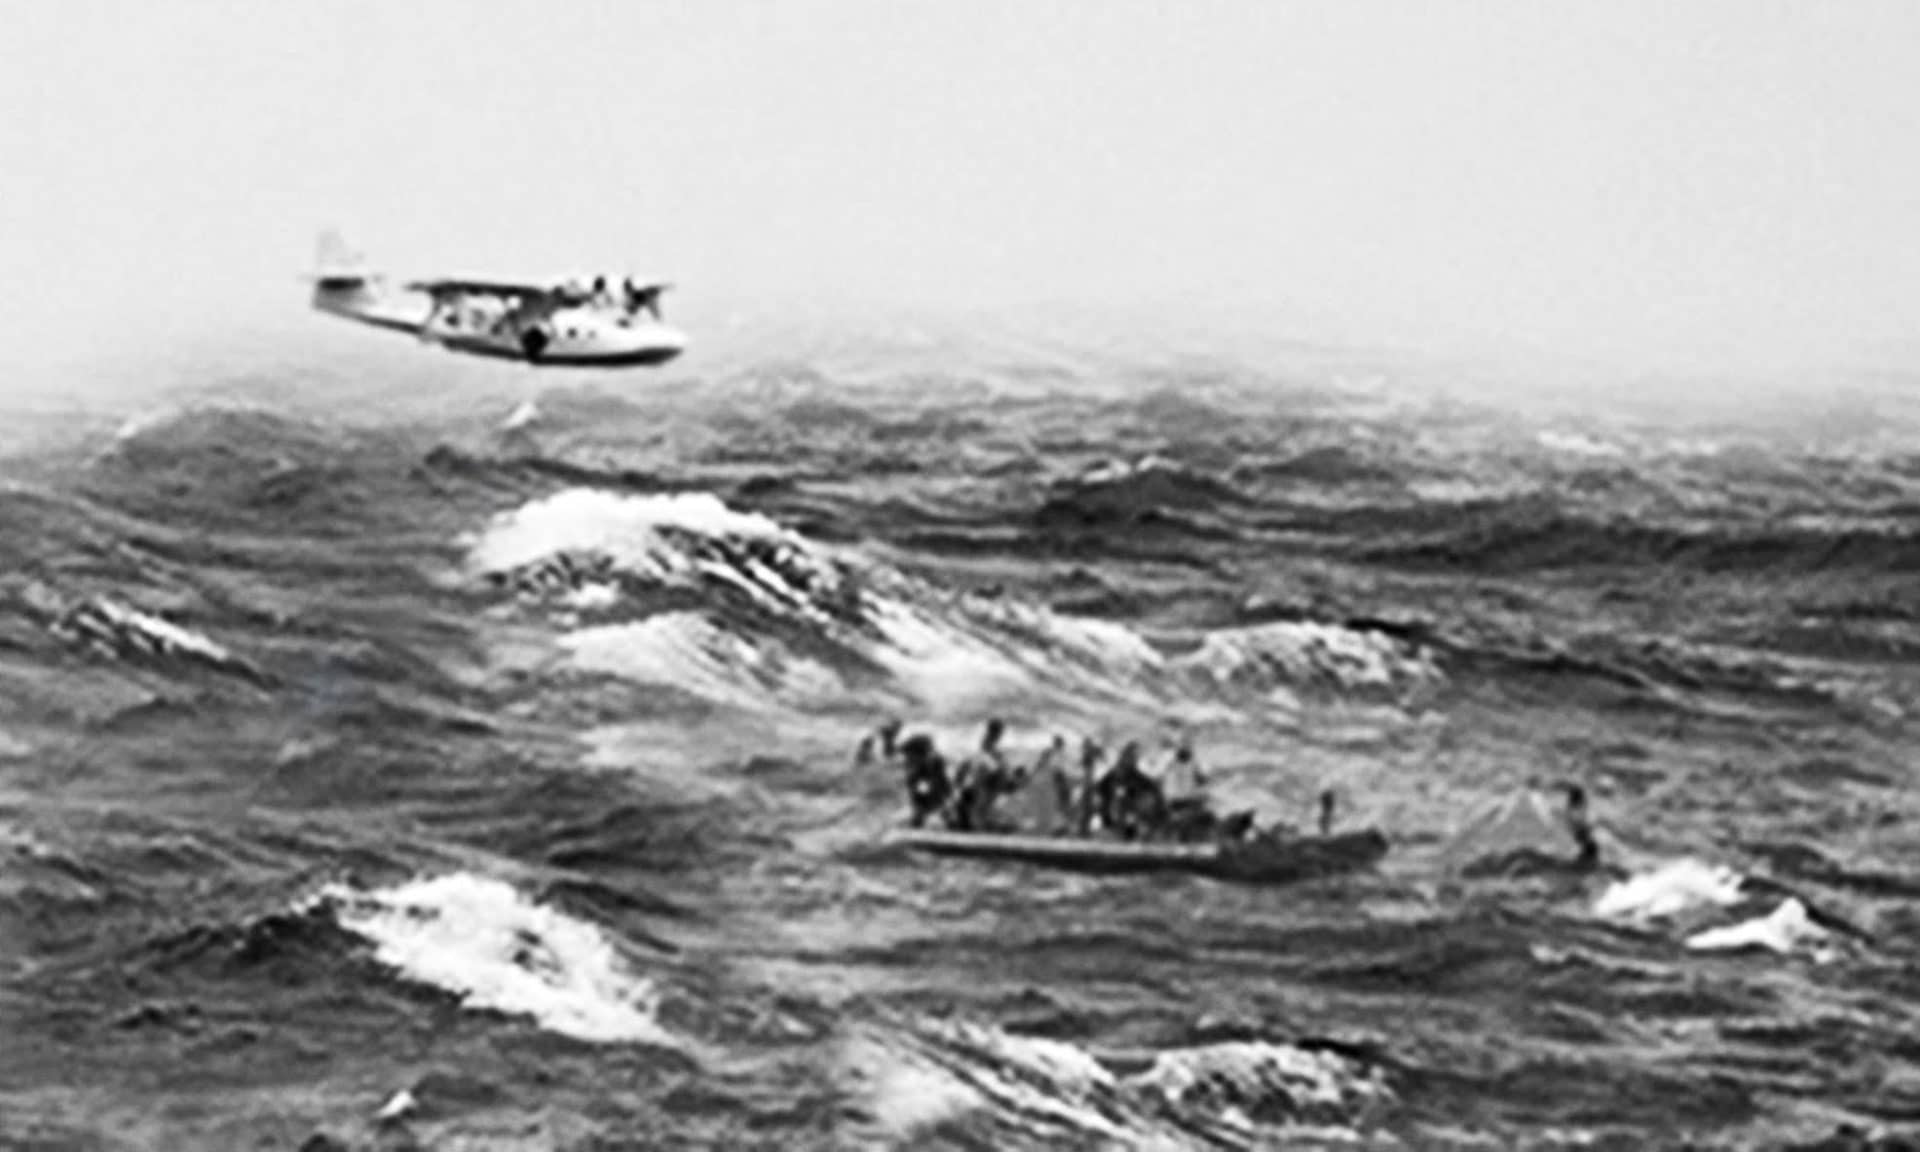 Dumbo PBY Catalina saved 56 USS Indianapolis sailors from massive Shark attack